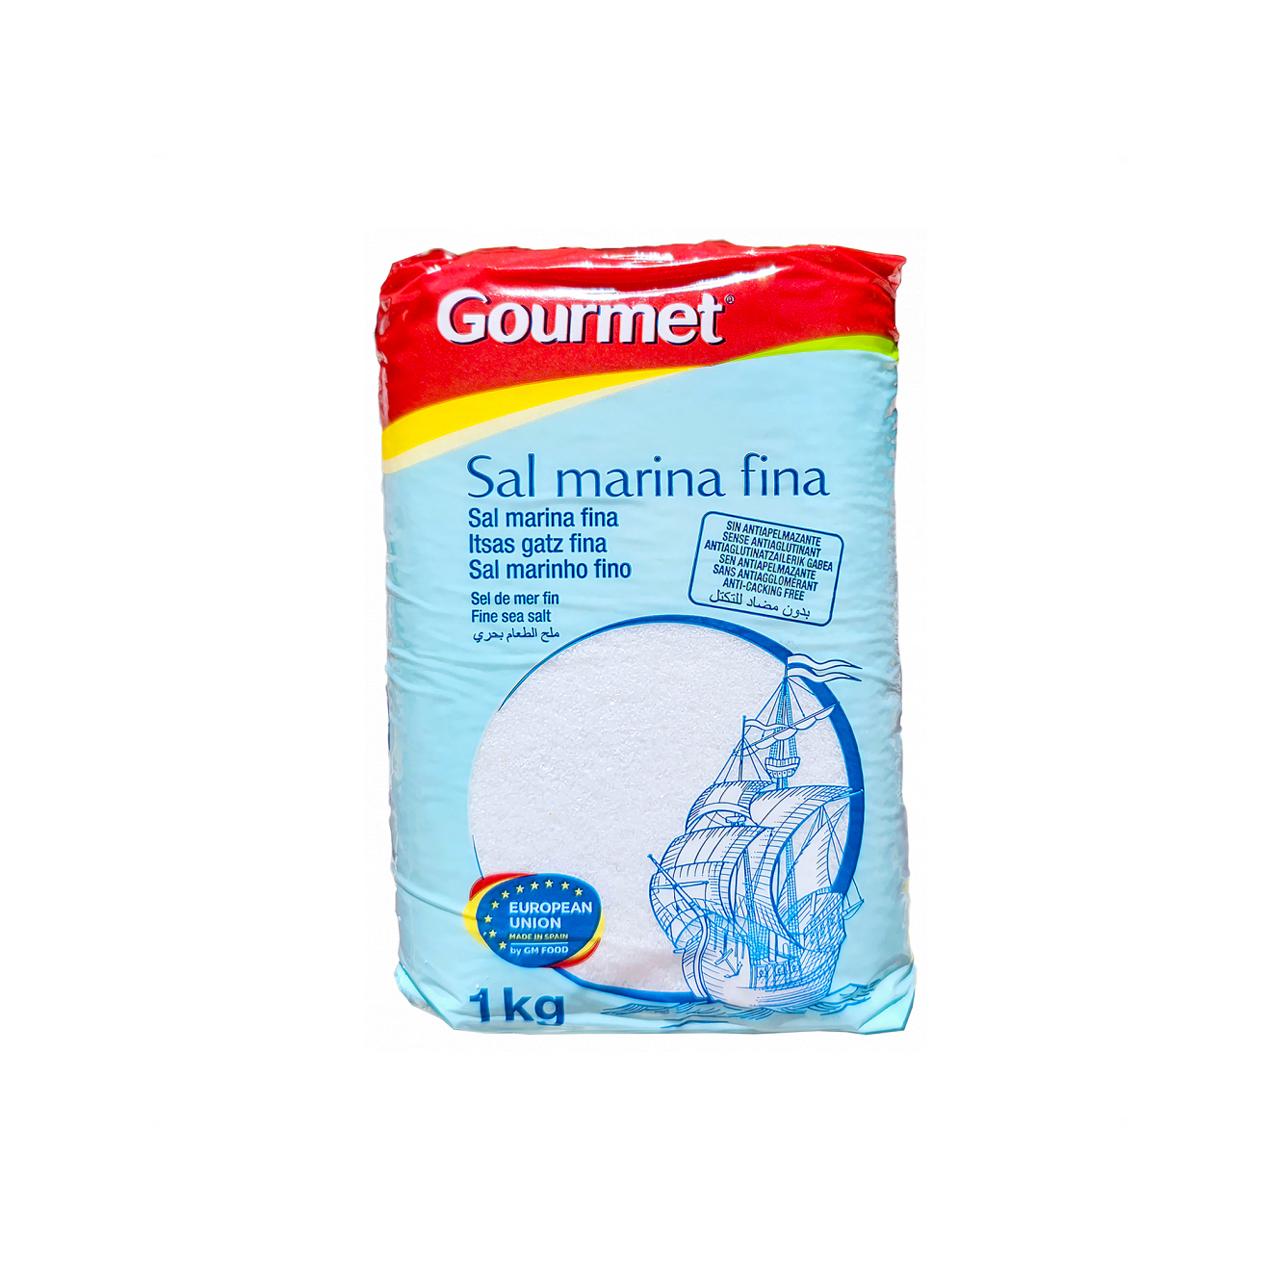 Sal marina fina Gourmet (1 kg / 2.2 lb)